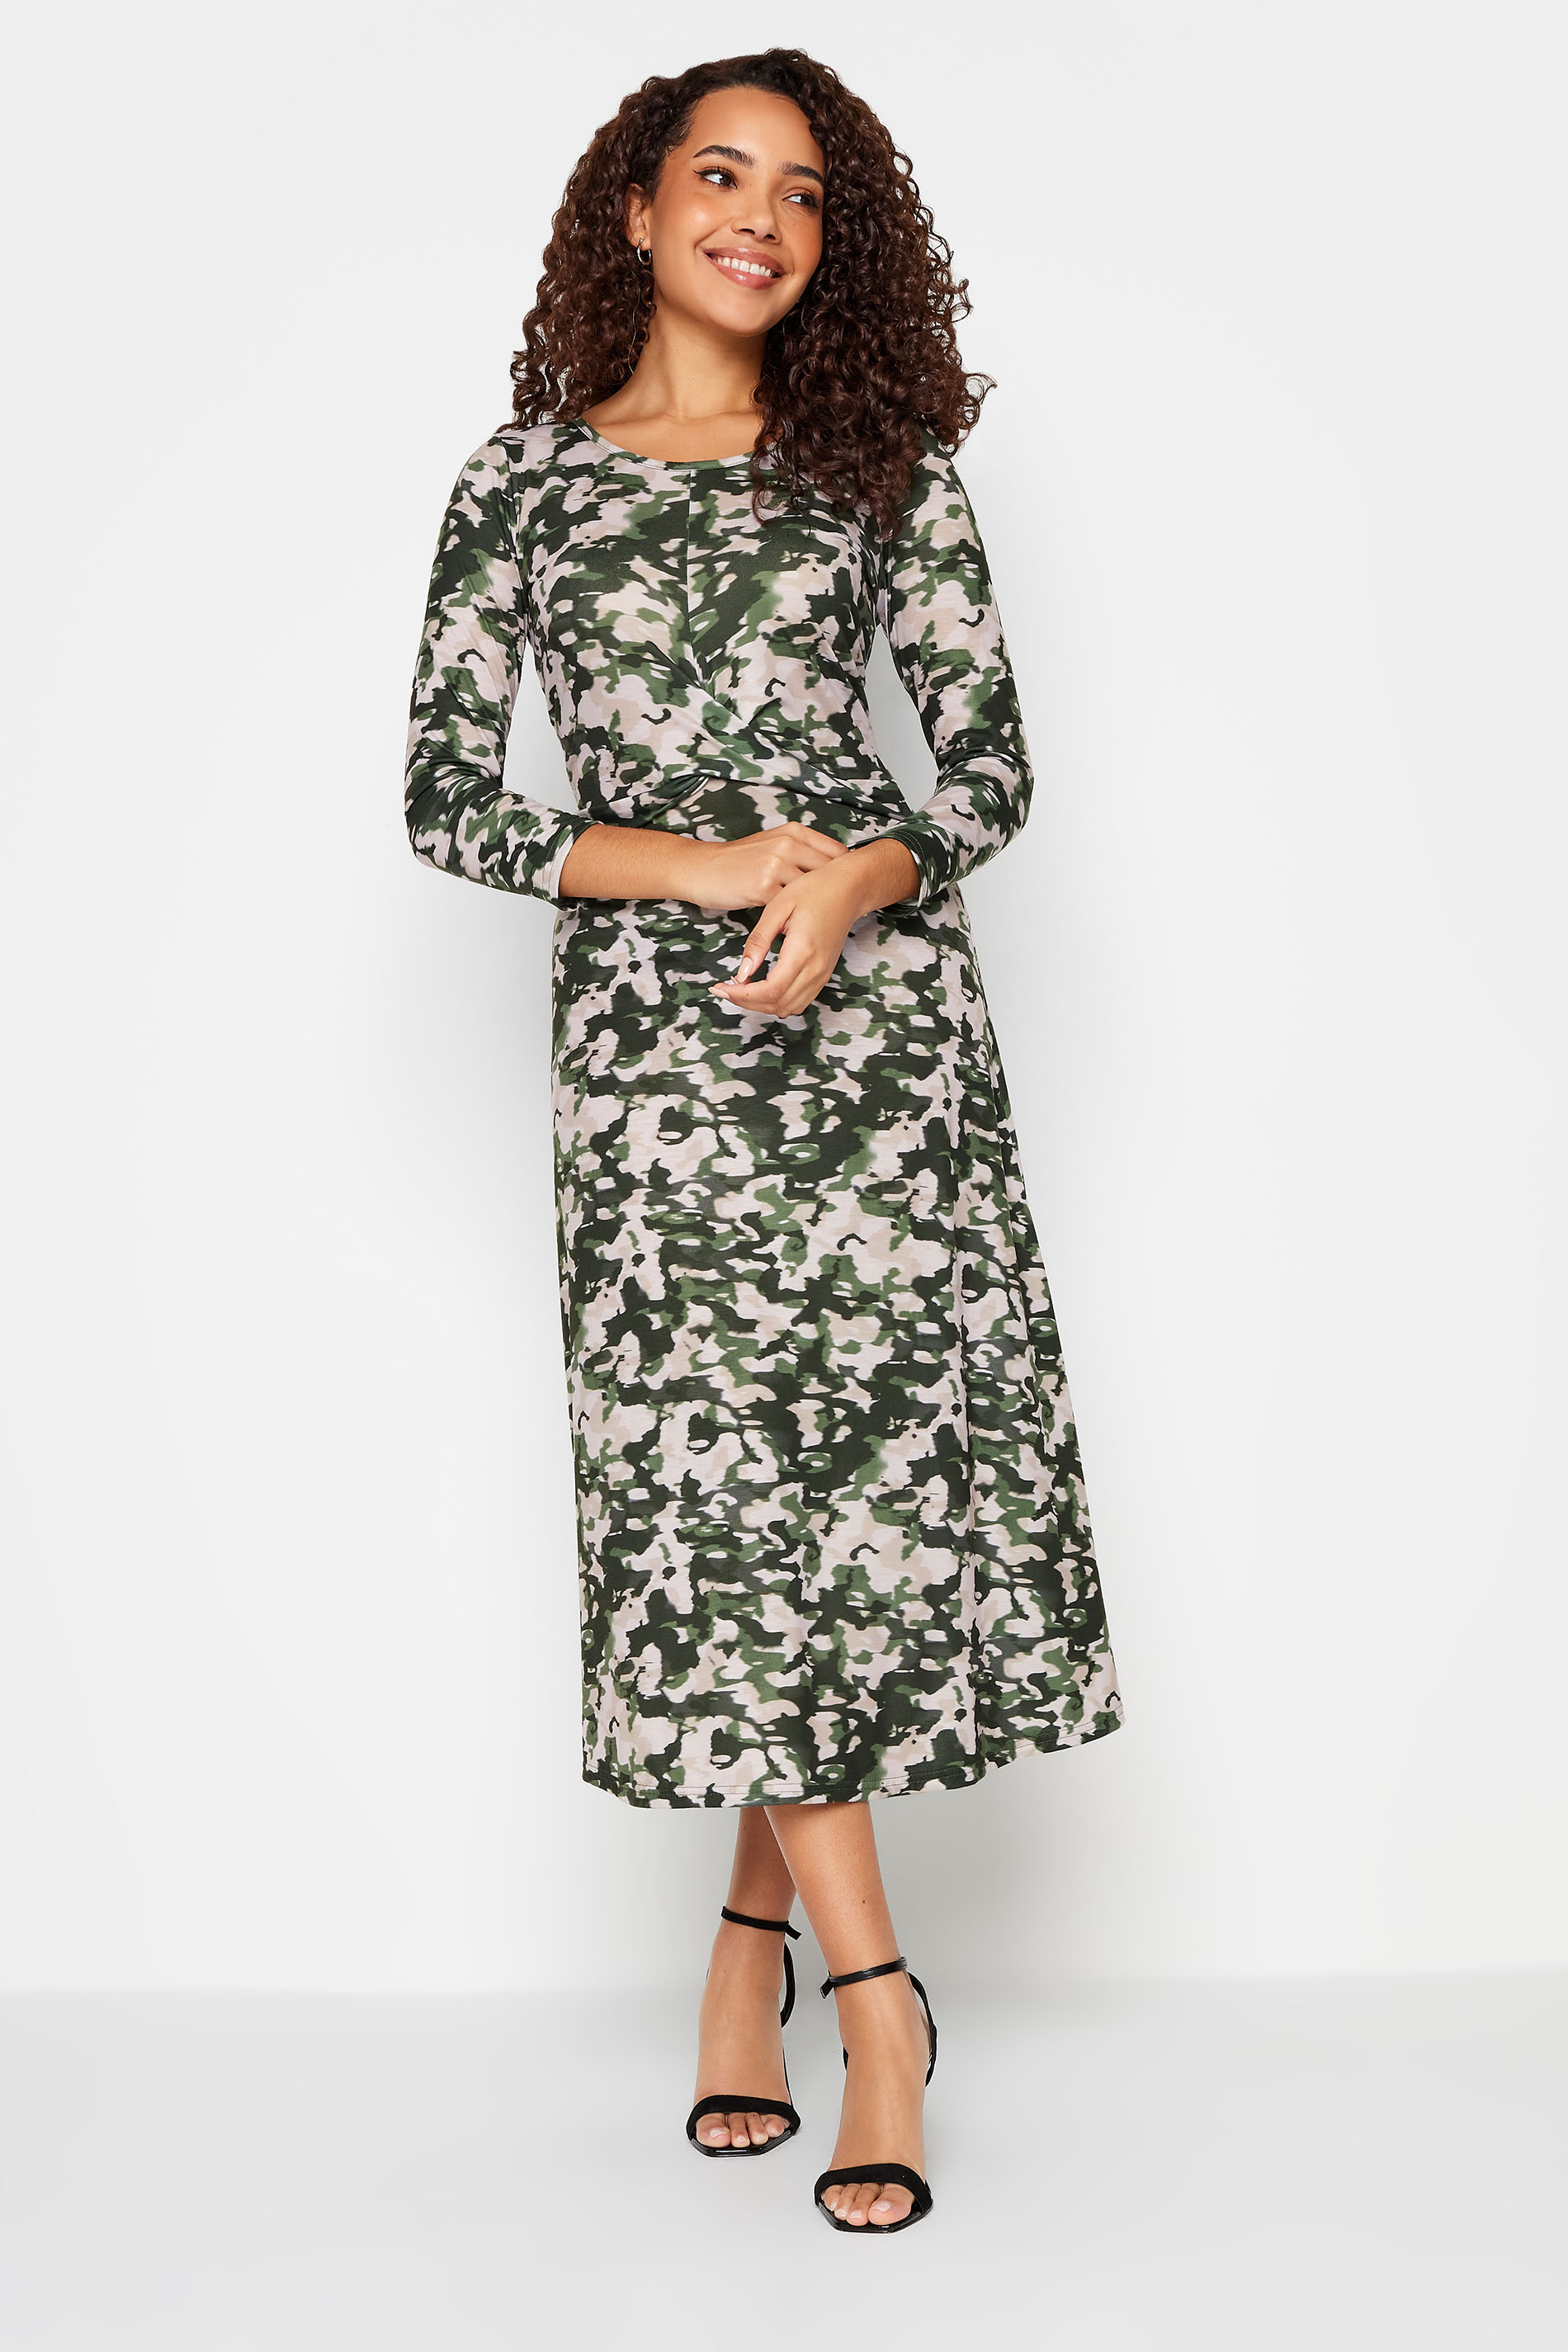 M&Co Khaki Green Camo Print Twist Front Midaxi Dress | M&Co 1